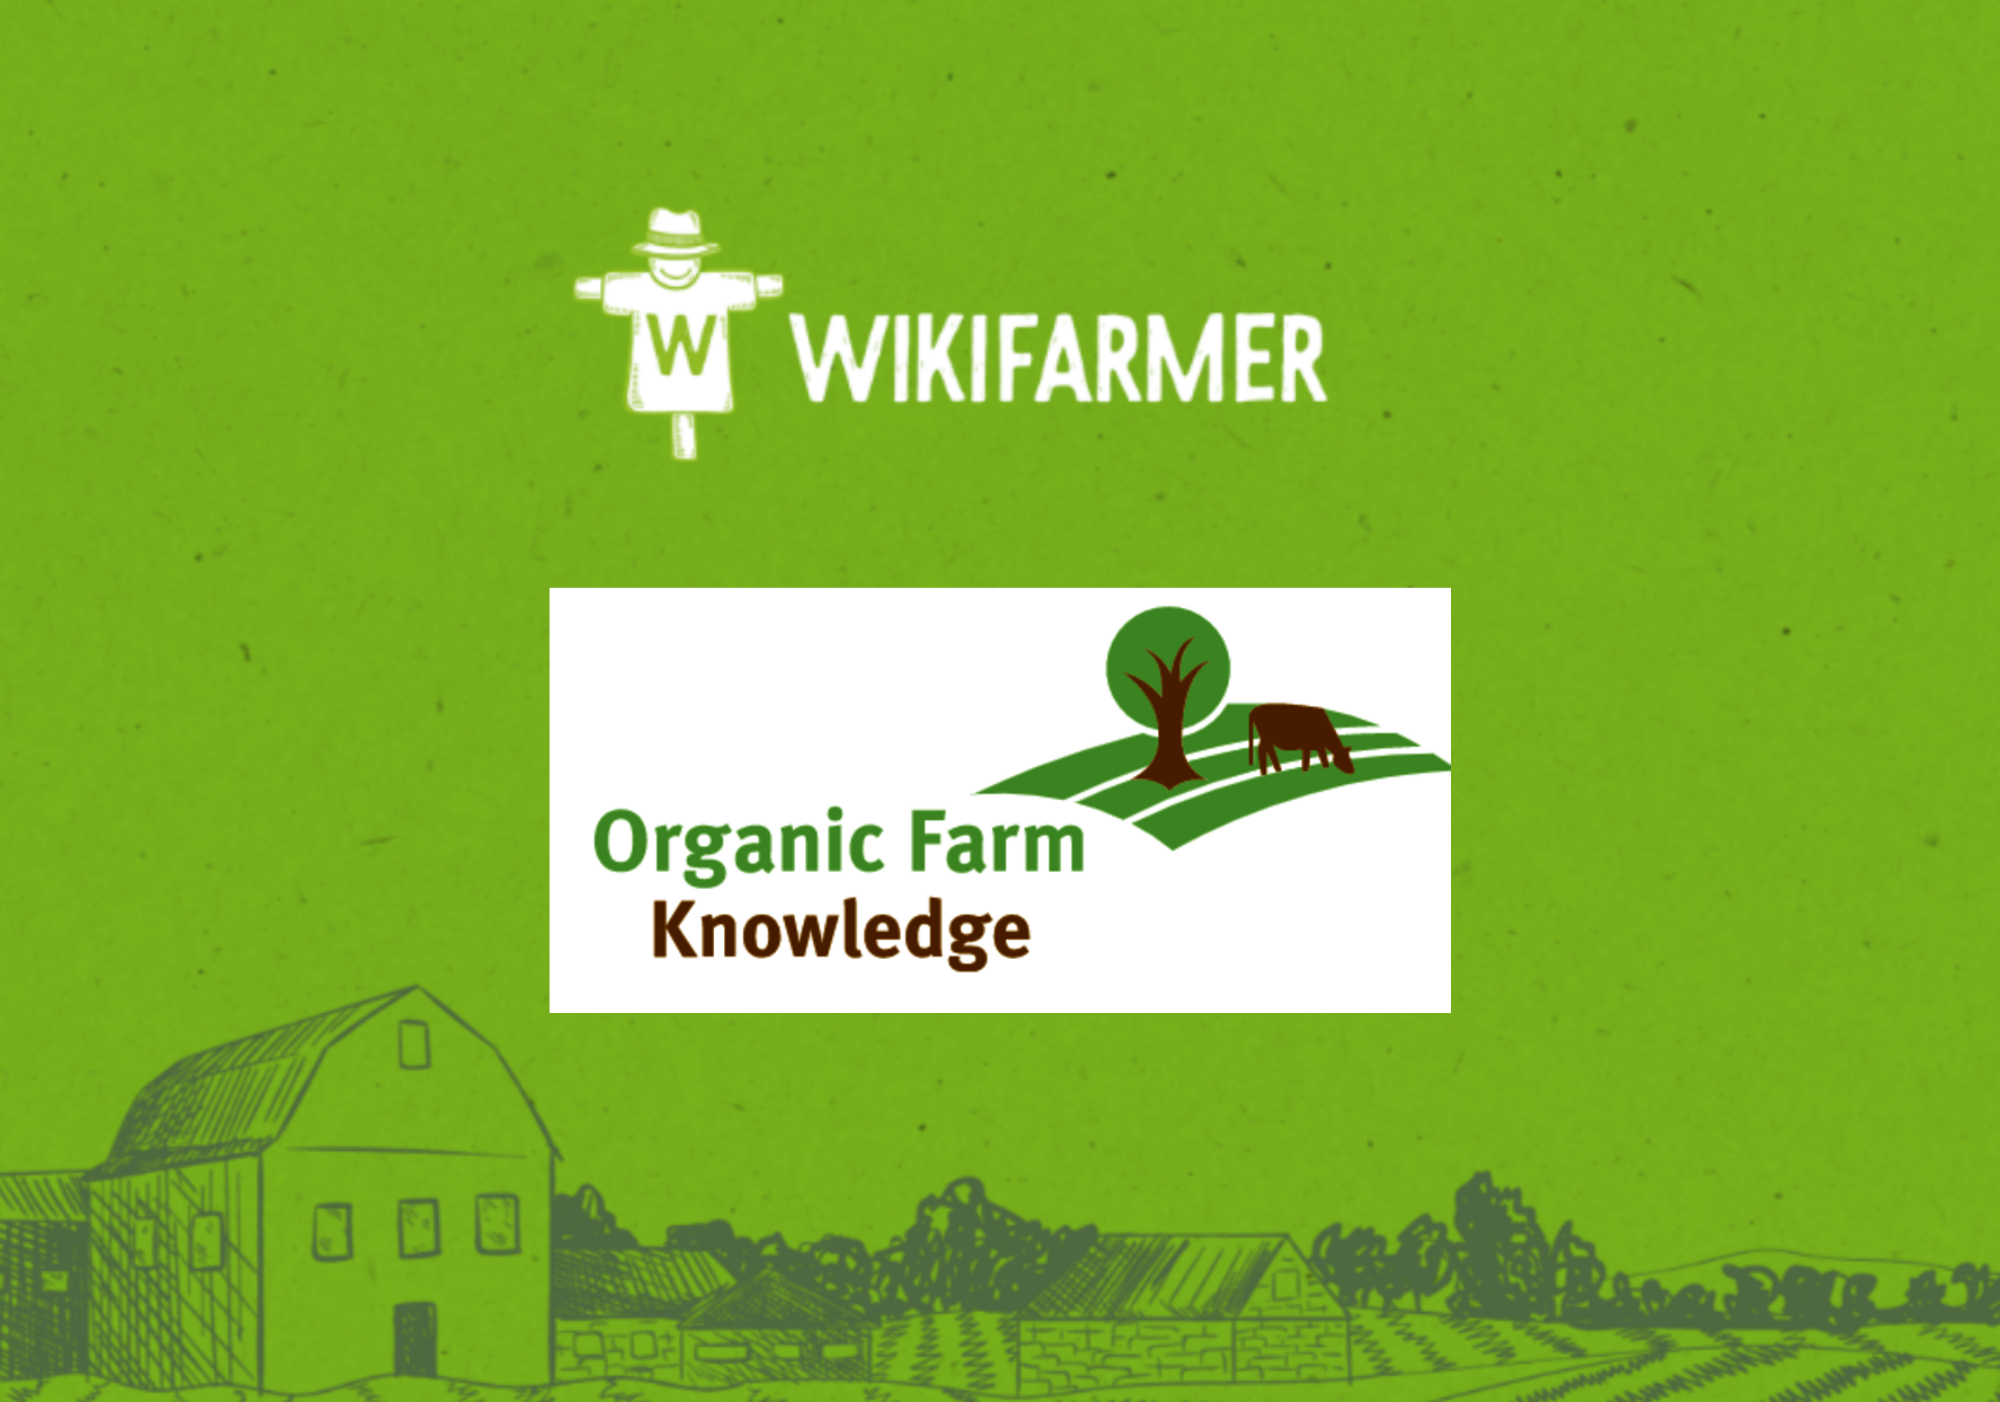 Partnership between Wikifarmer and Organic Farm Knowledge